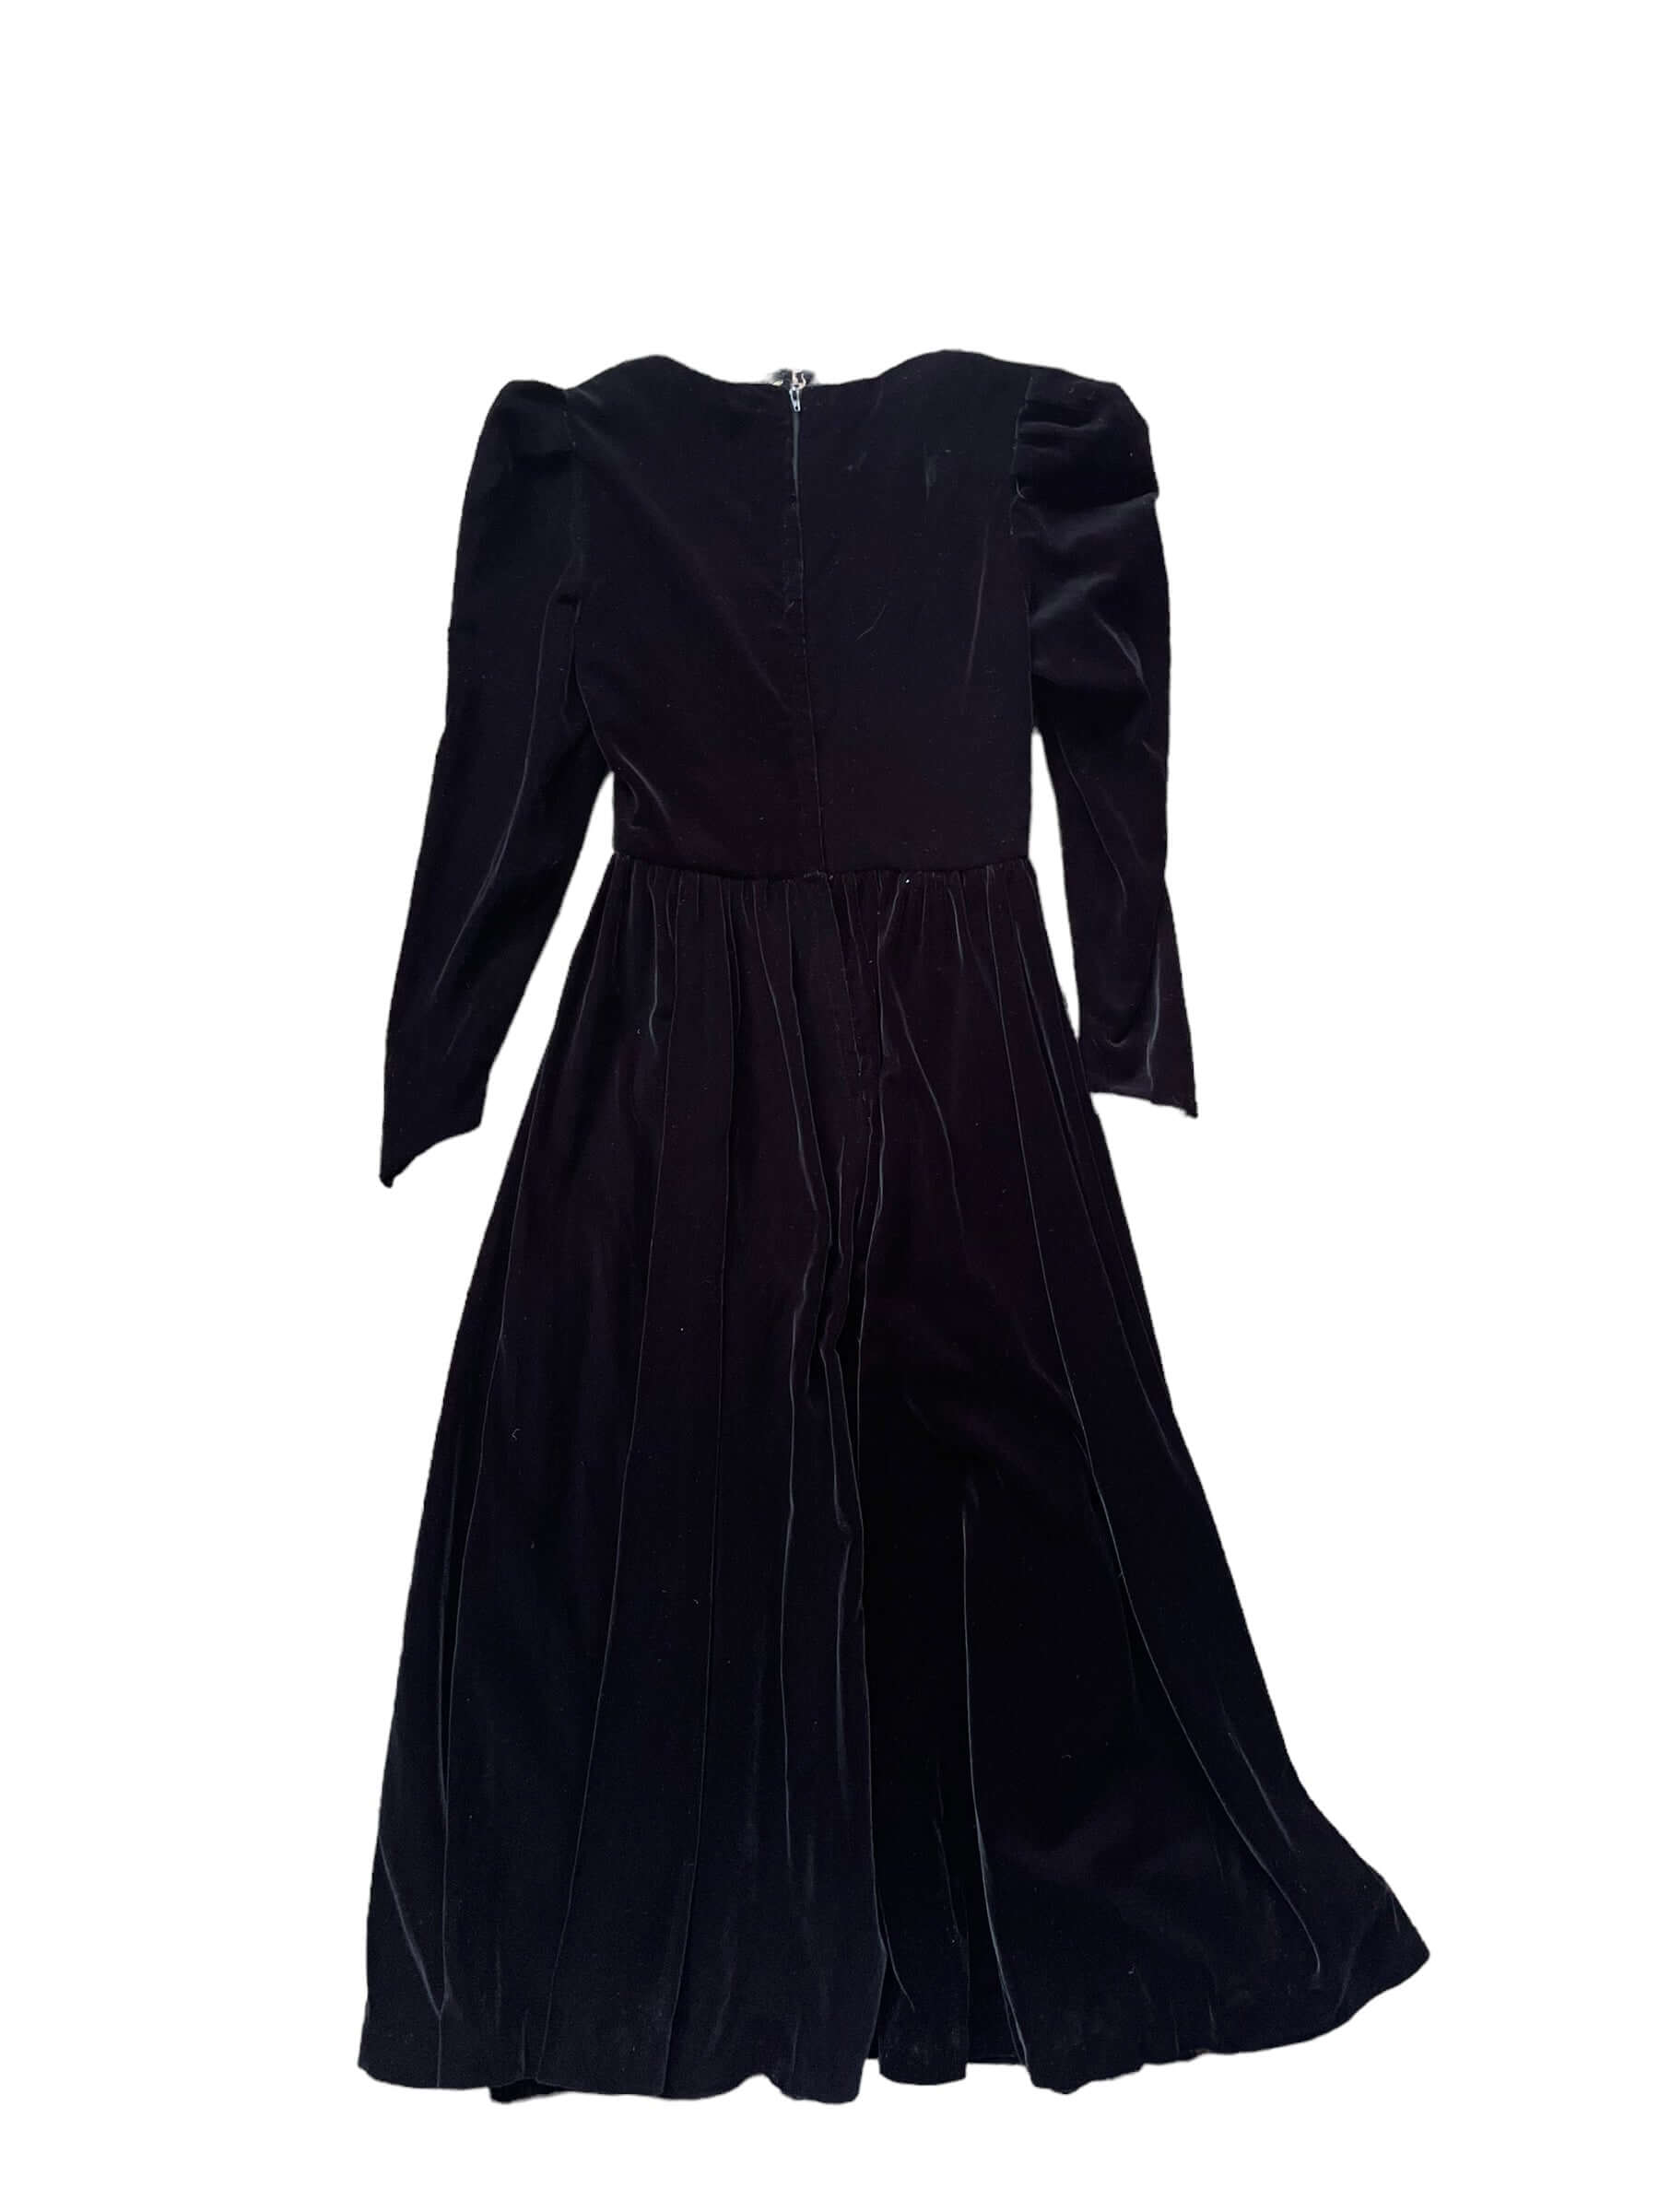 FUll back view of Vintage 1970s Black Velvet Dress |  Barn Owl Vintage Dresses | Seattle Vintage Ladies Clothing